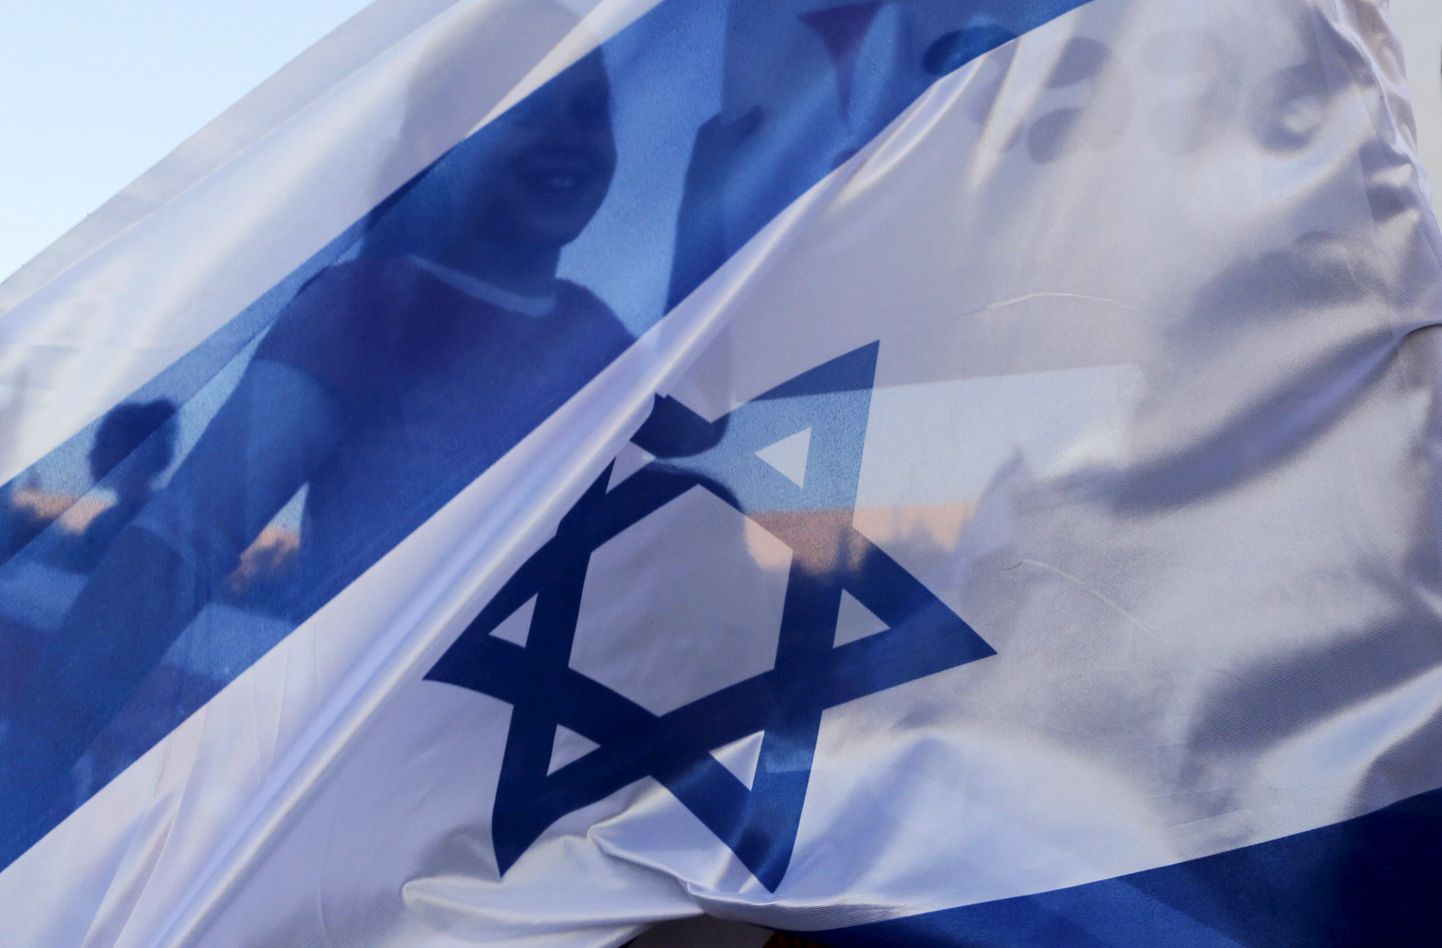 Iisraeli lipp